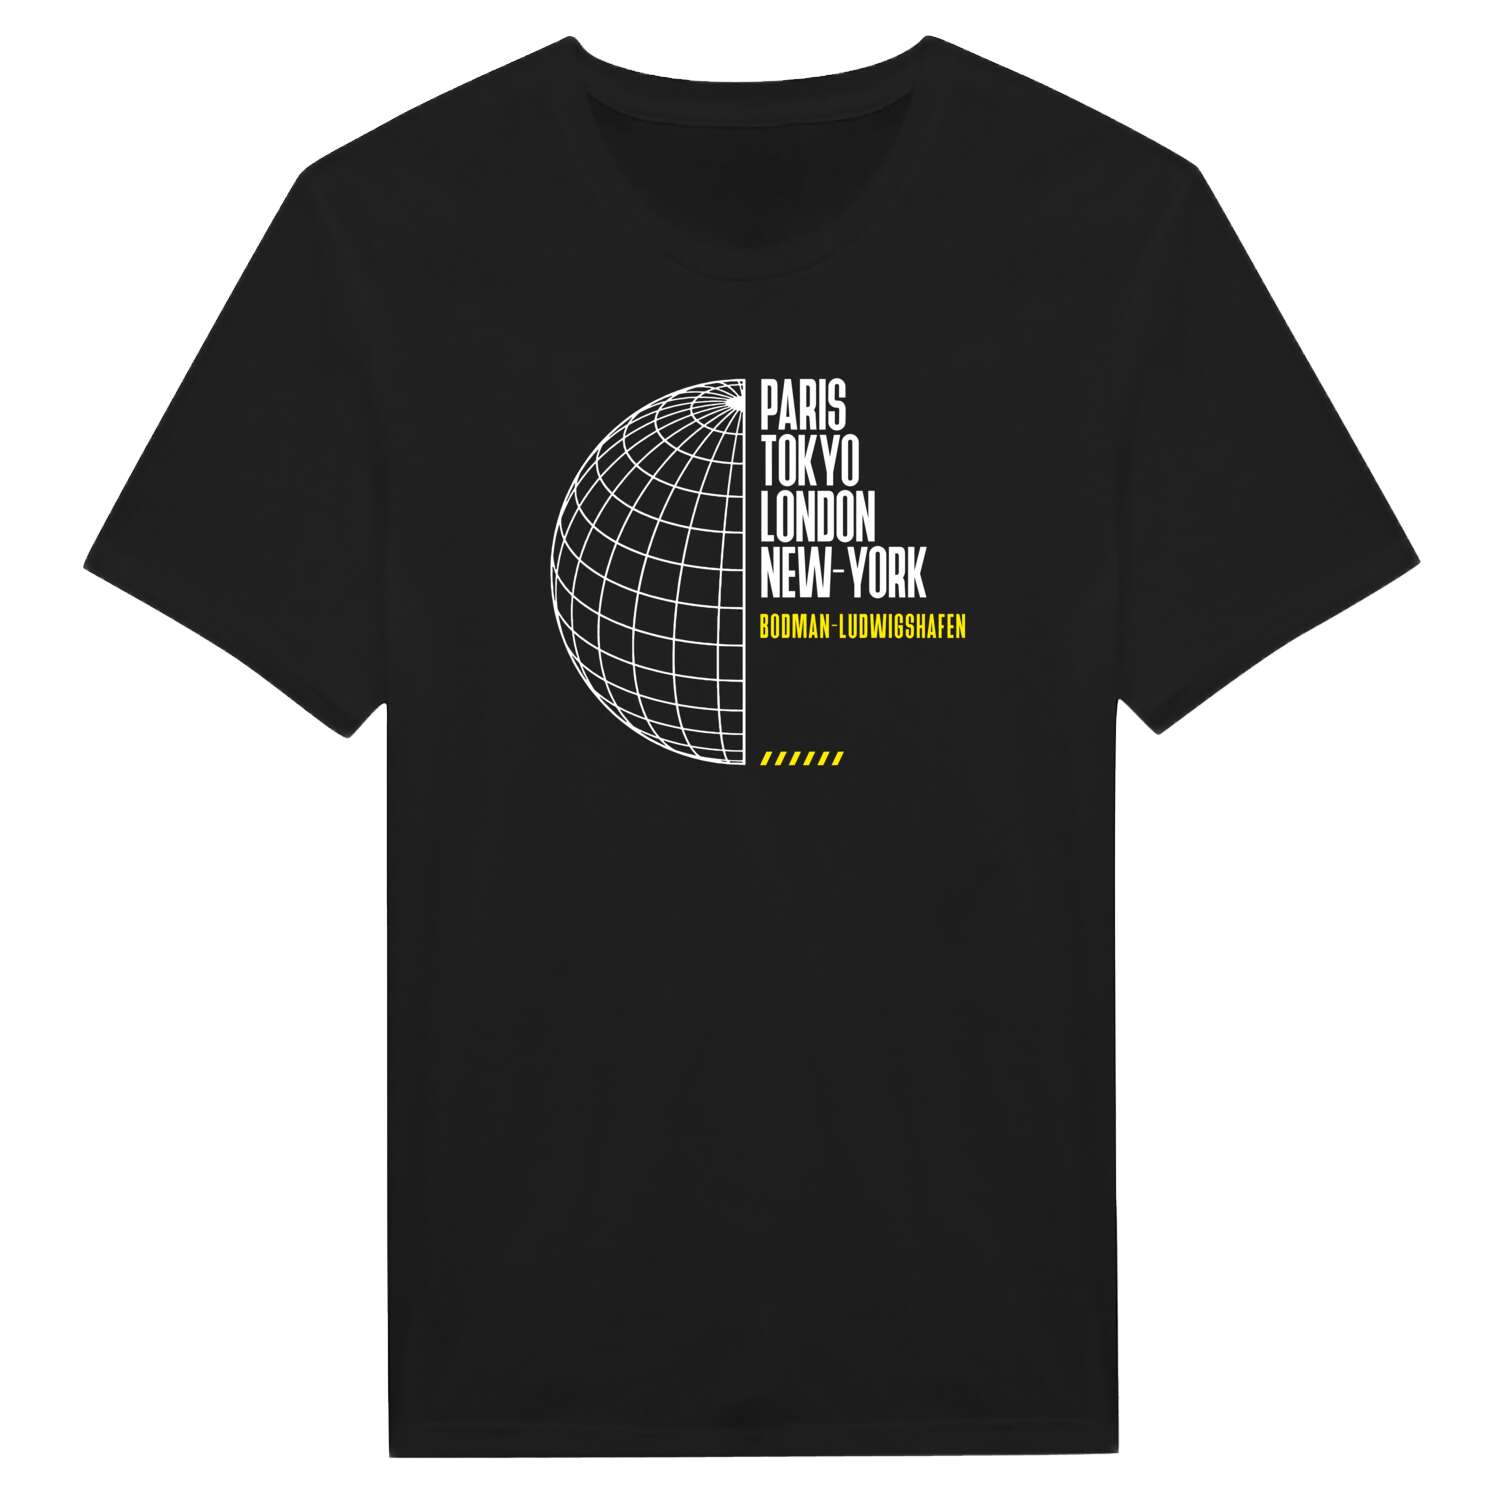 Bodman-Ludwigshafen T-Shirt »Paris Tokyo London«